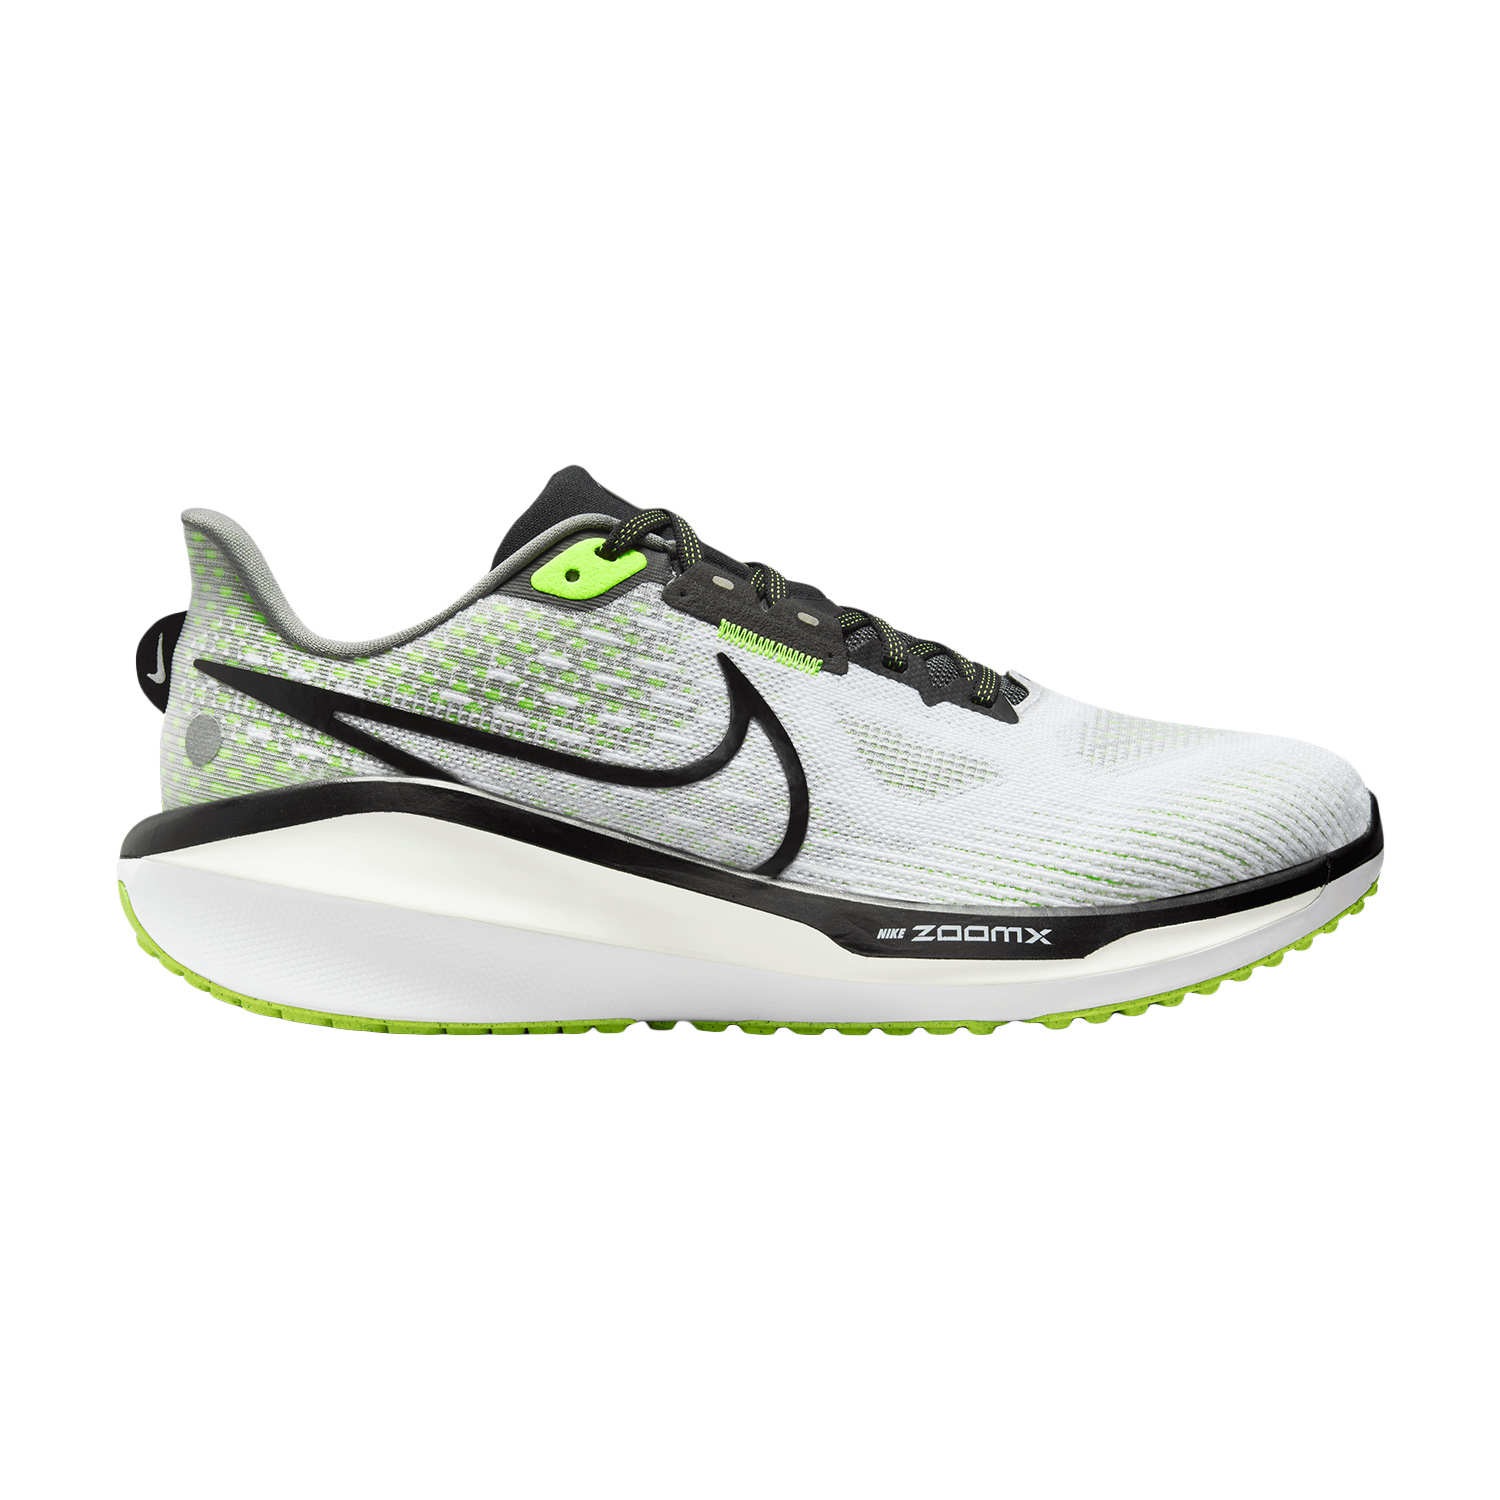 Nike Vomero 17 Wide Men's Running Shoes - Black/White